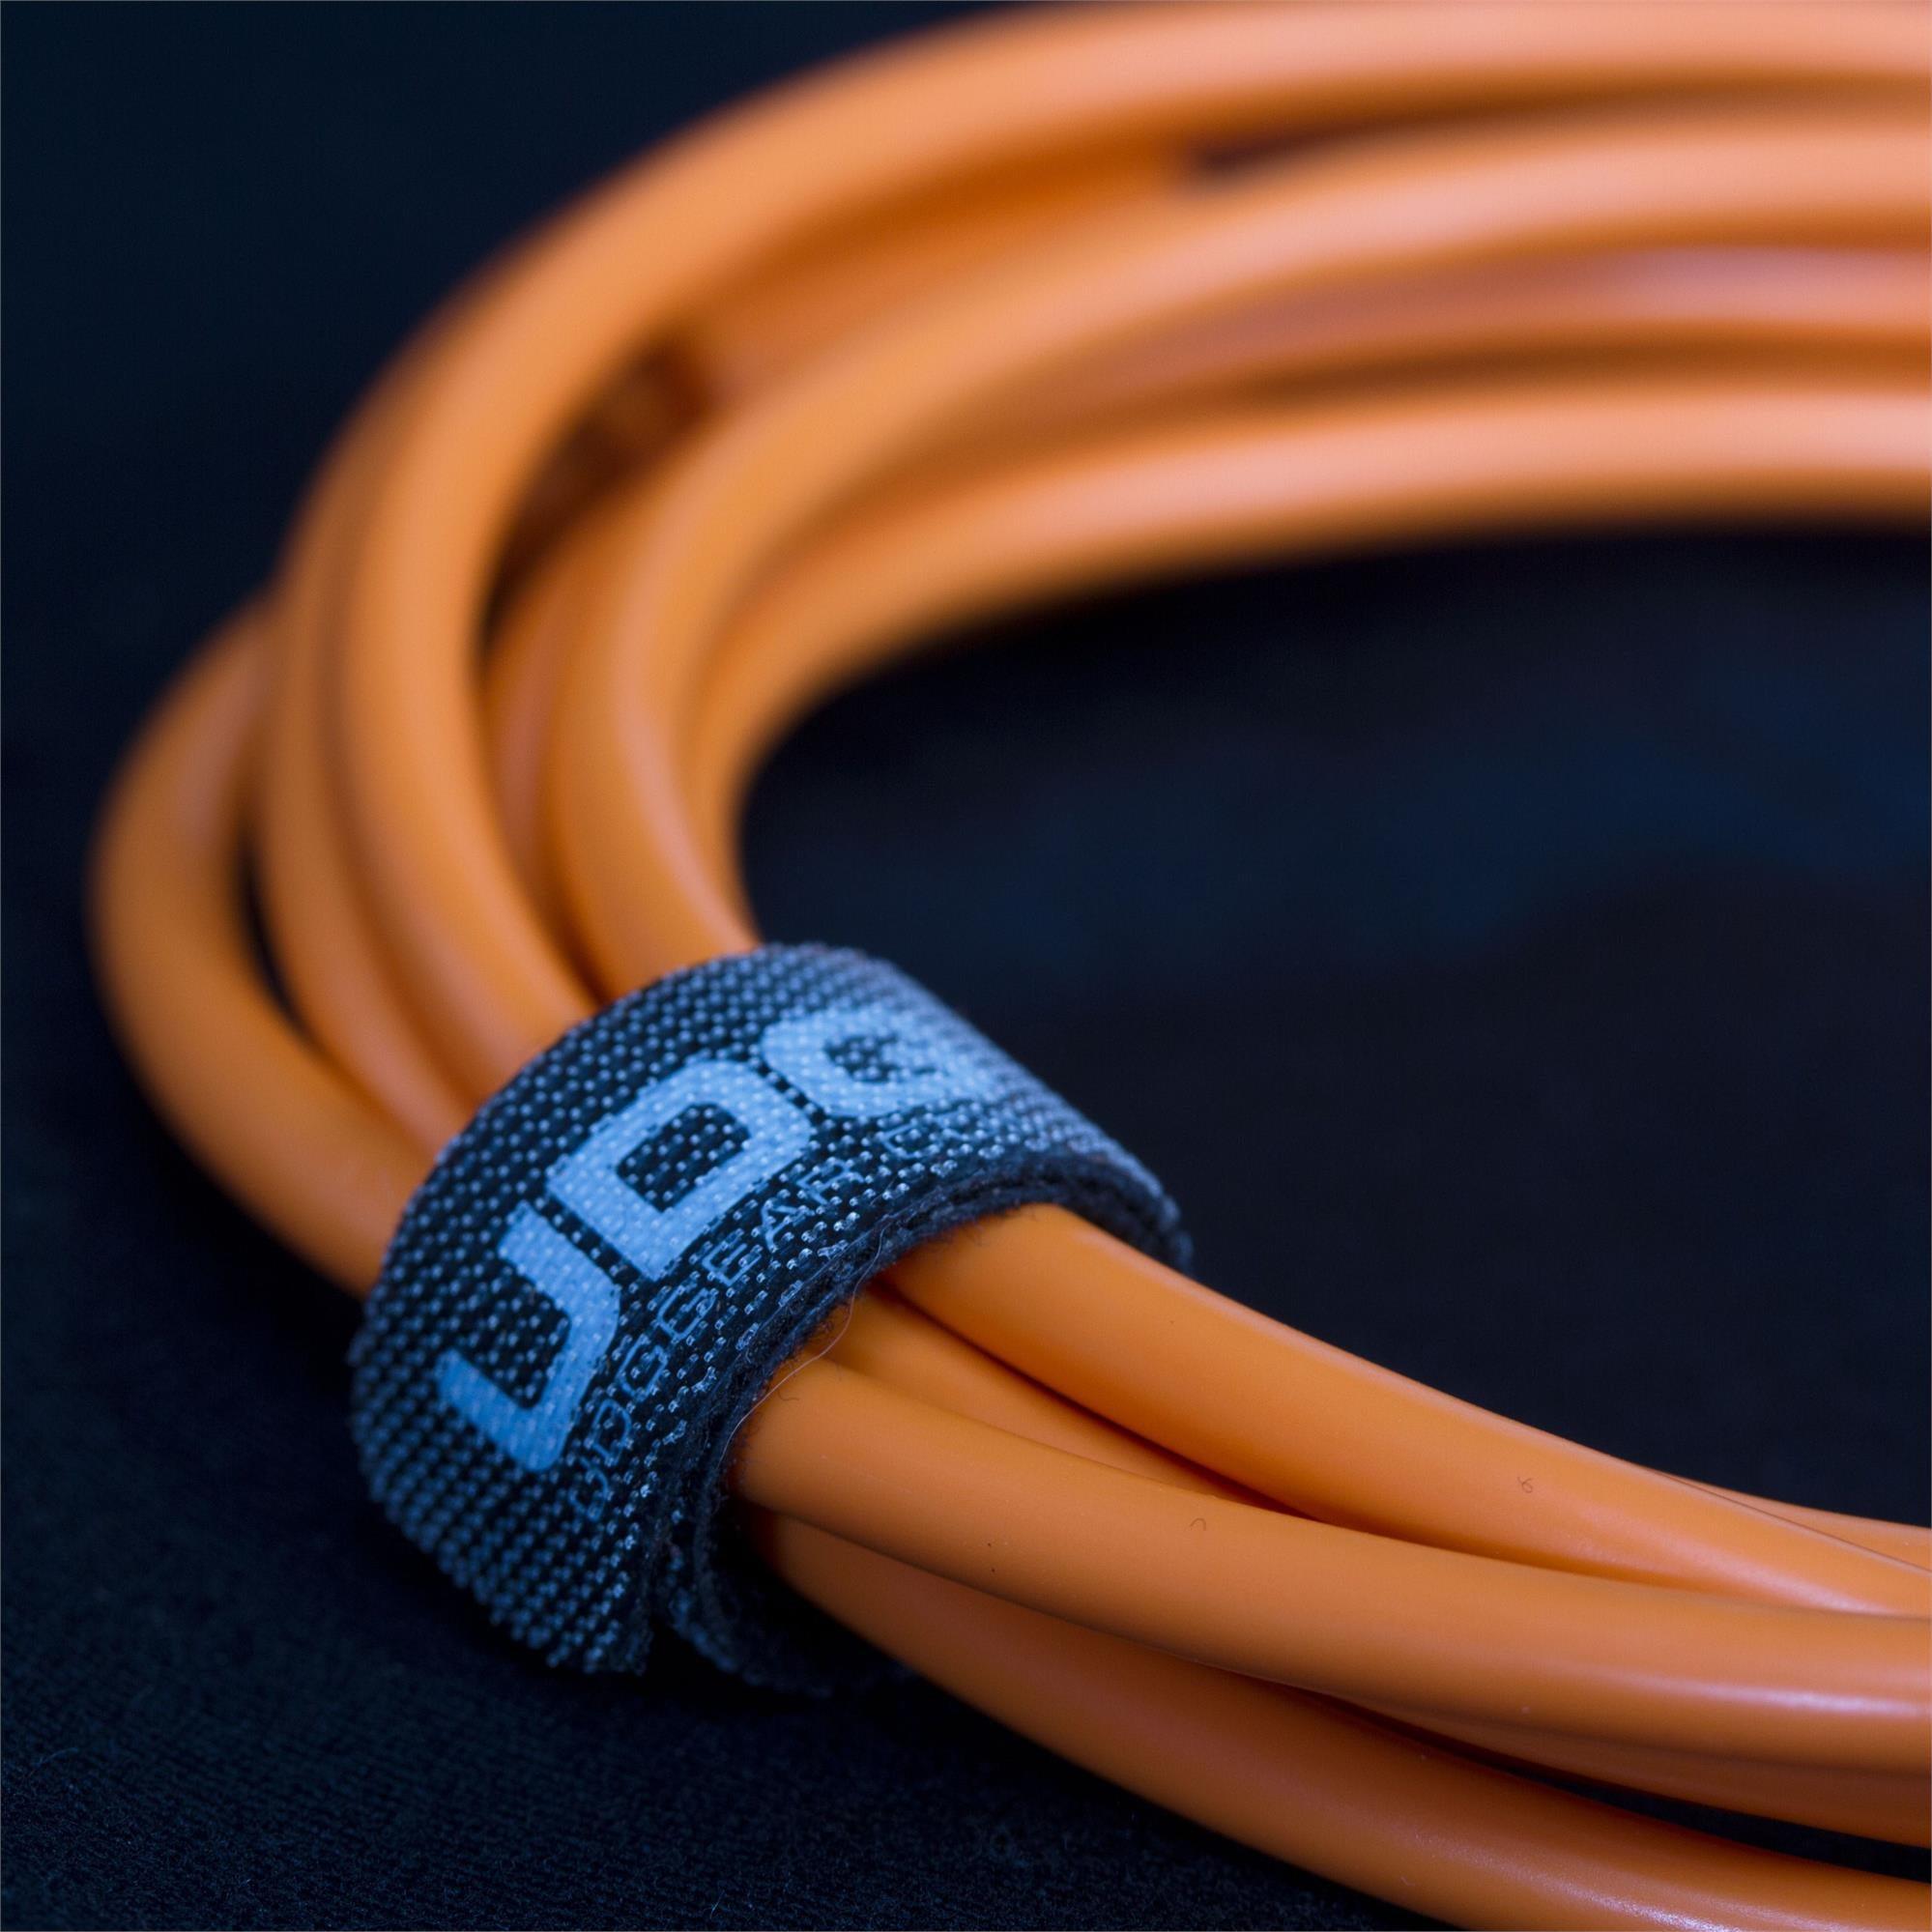 UDG Cable USB 2.0 (Type C-B) Straight 1.5M Orange - DY Pro Audio